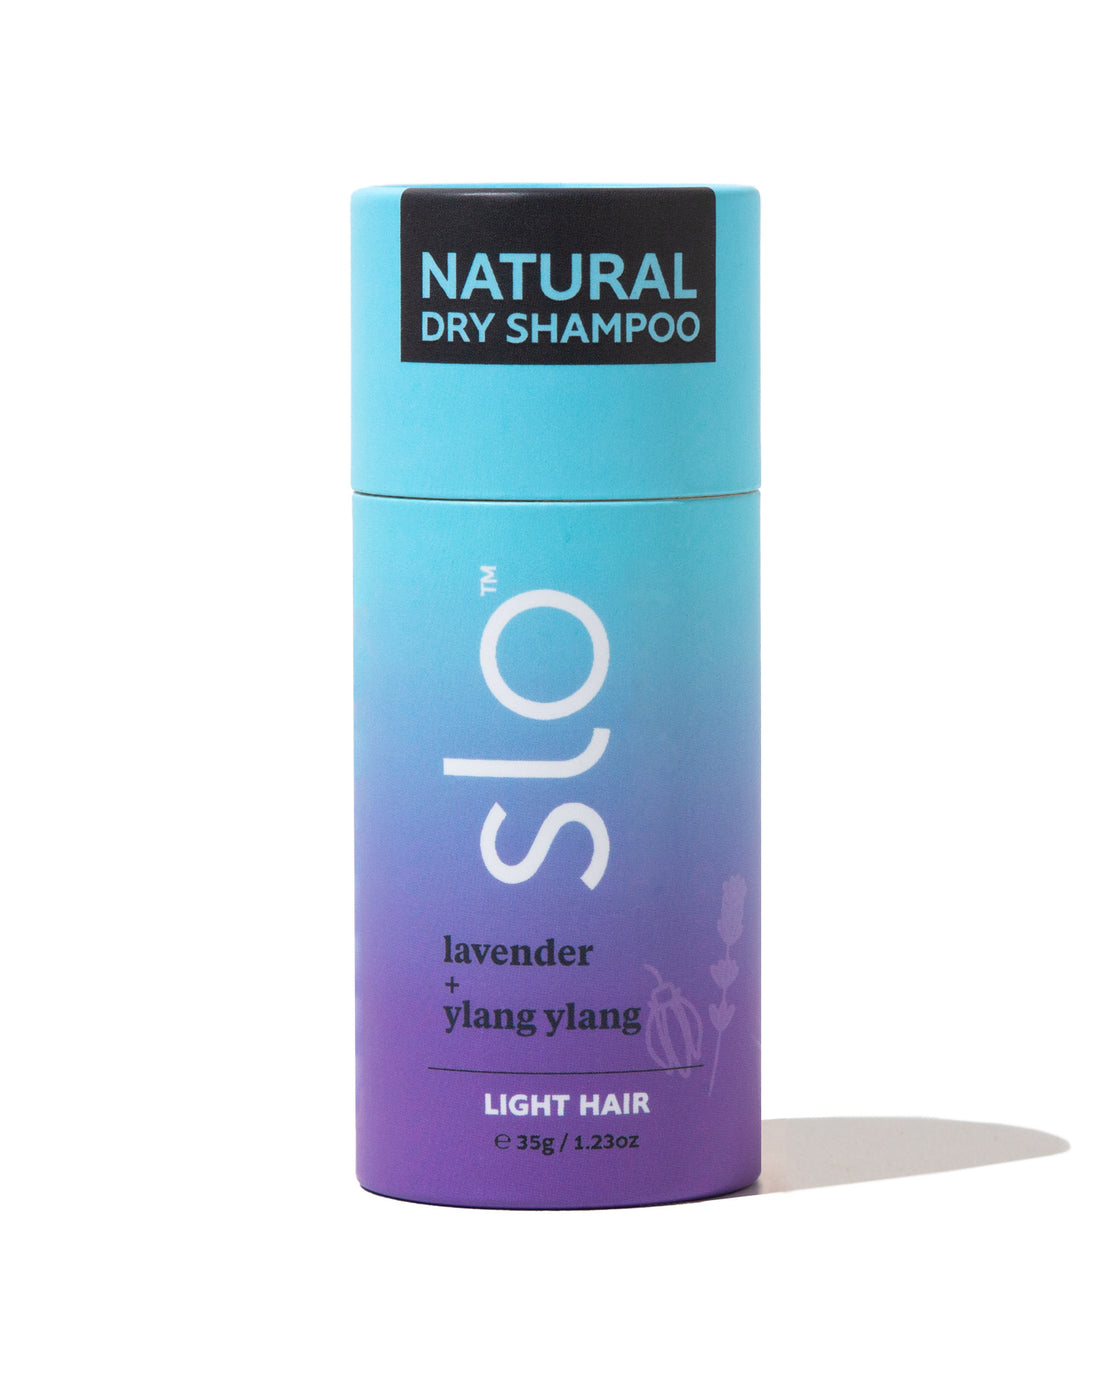 Natural Dry Shampoo - Light Hair